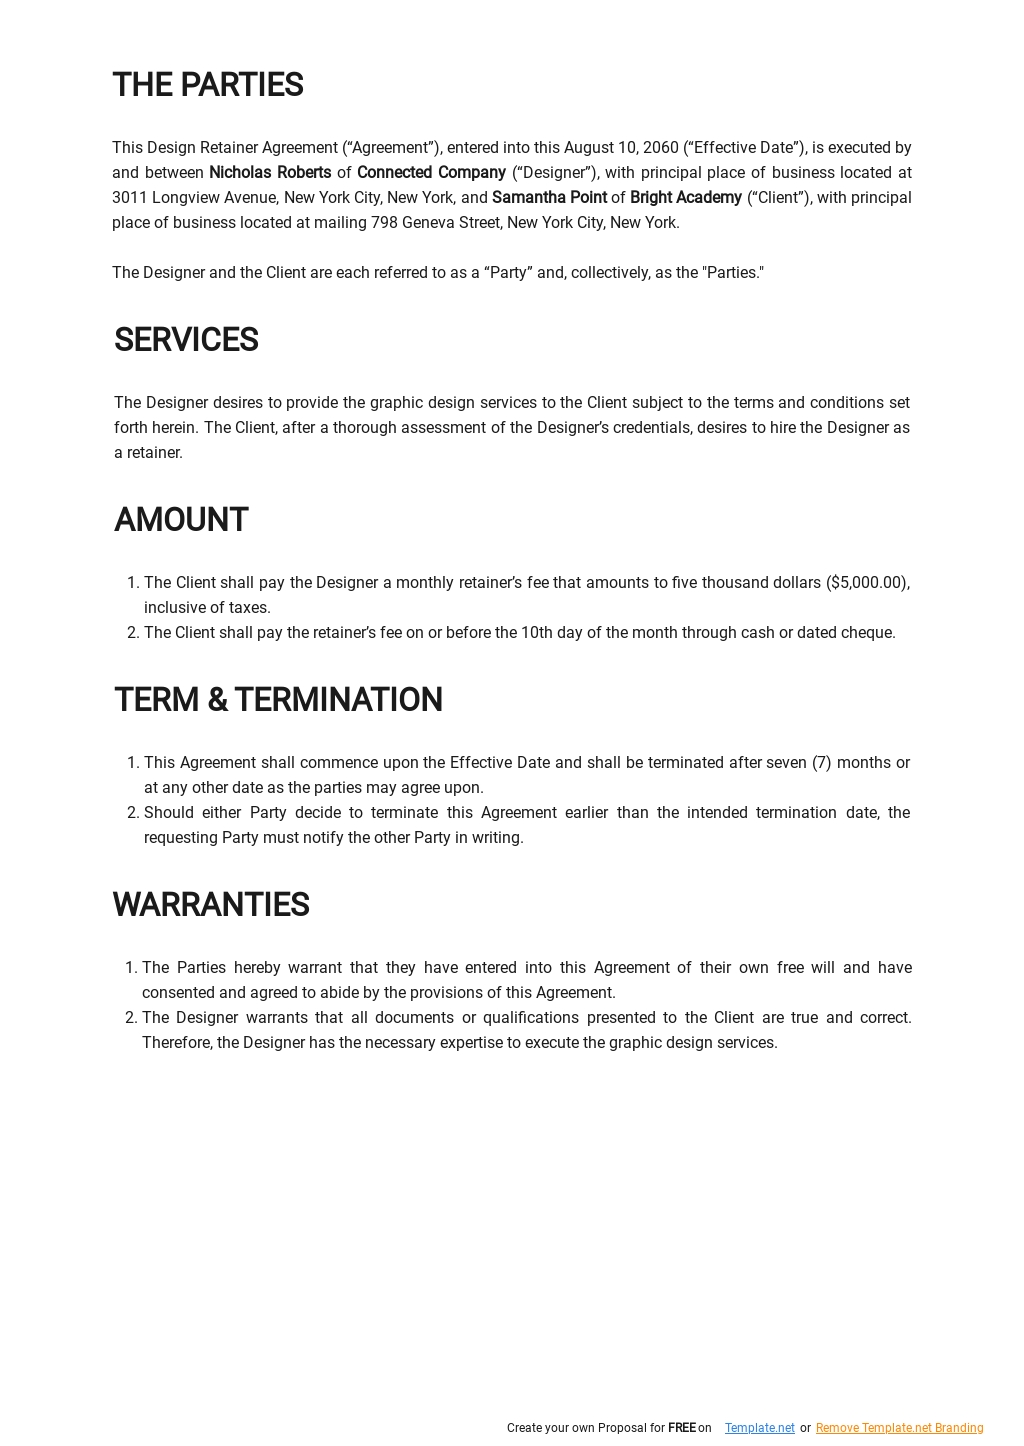 Design Retainer Agreement Template - Google Docs, Word  Template.net Intended For design retainer agreement templates